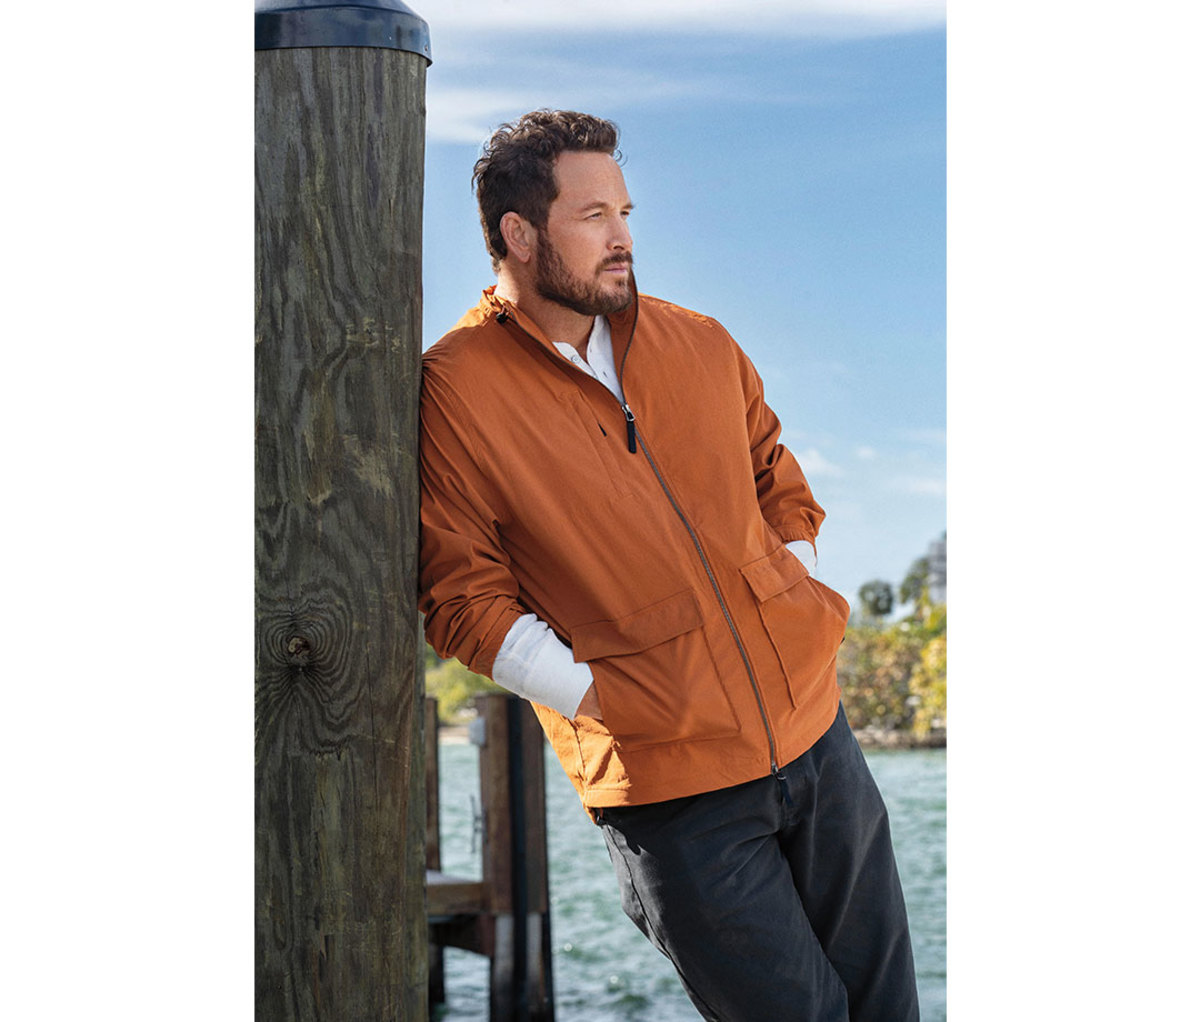 Caucasian man in orange jacket leaning against pier